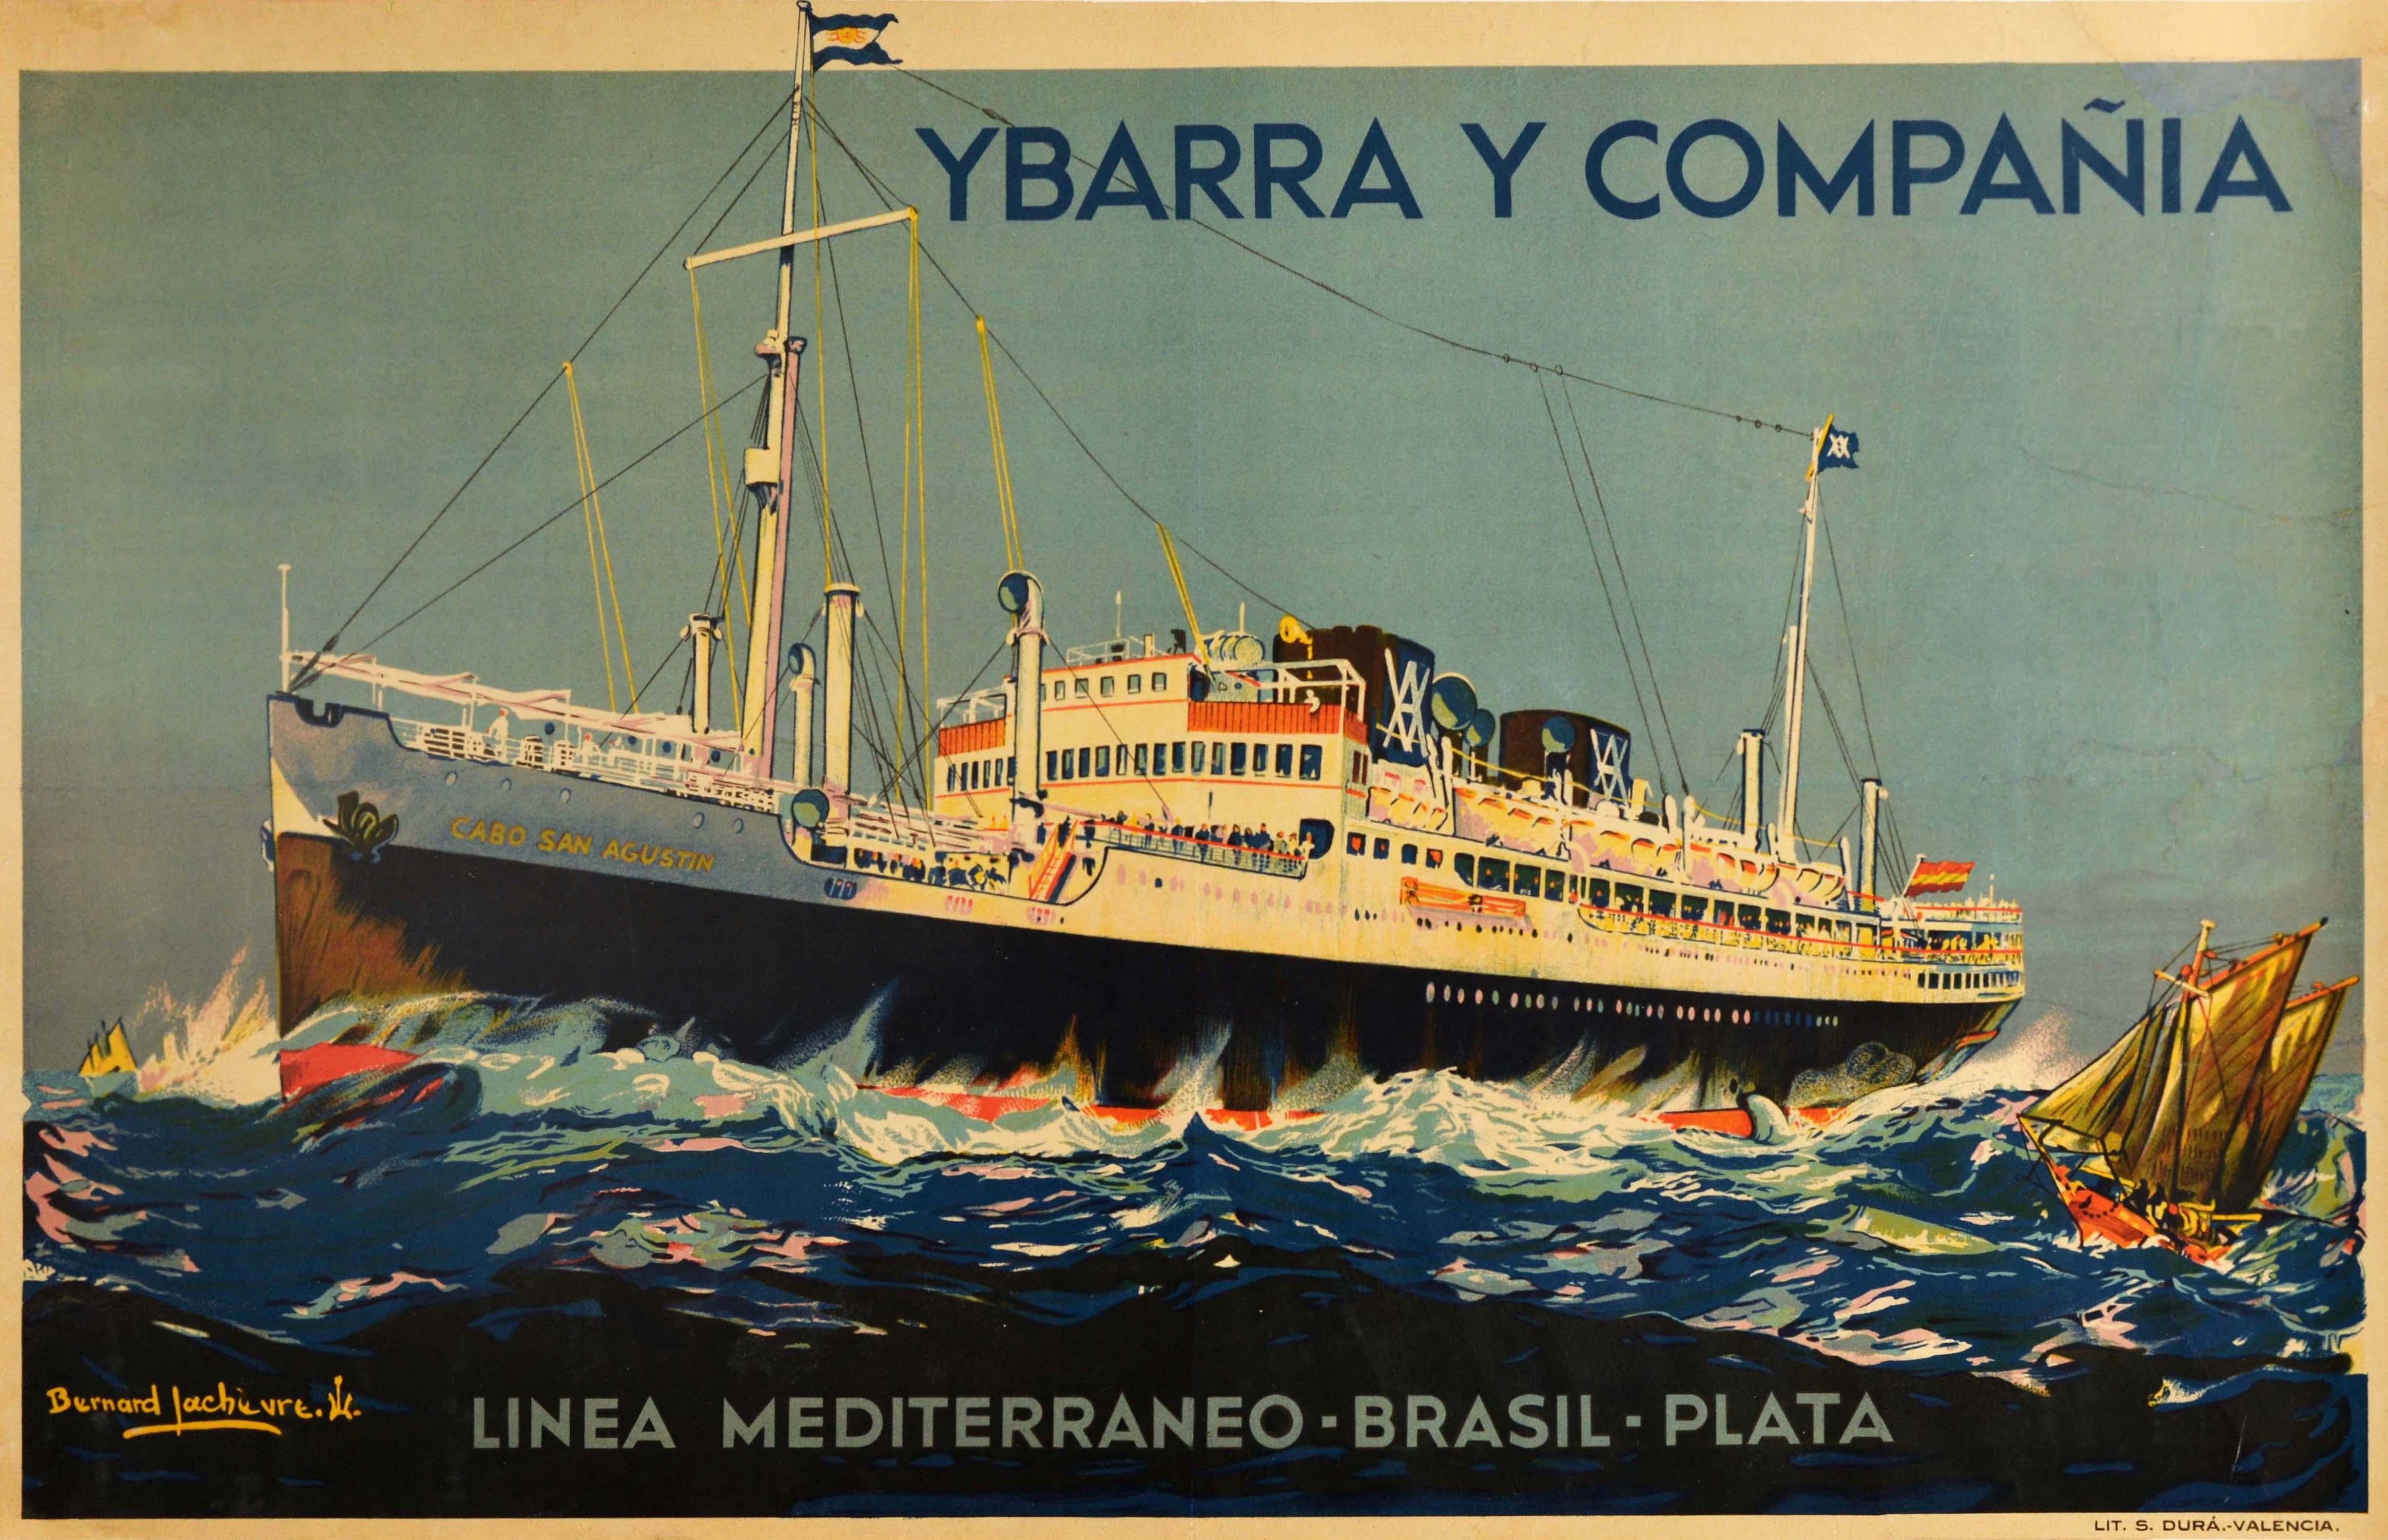 Bernard Lachevre Print - Original Vintage Poster Mediterranean Brazil Cruise Liner Travel Ybarra Ship Art